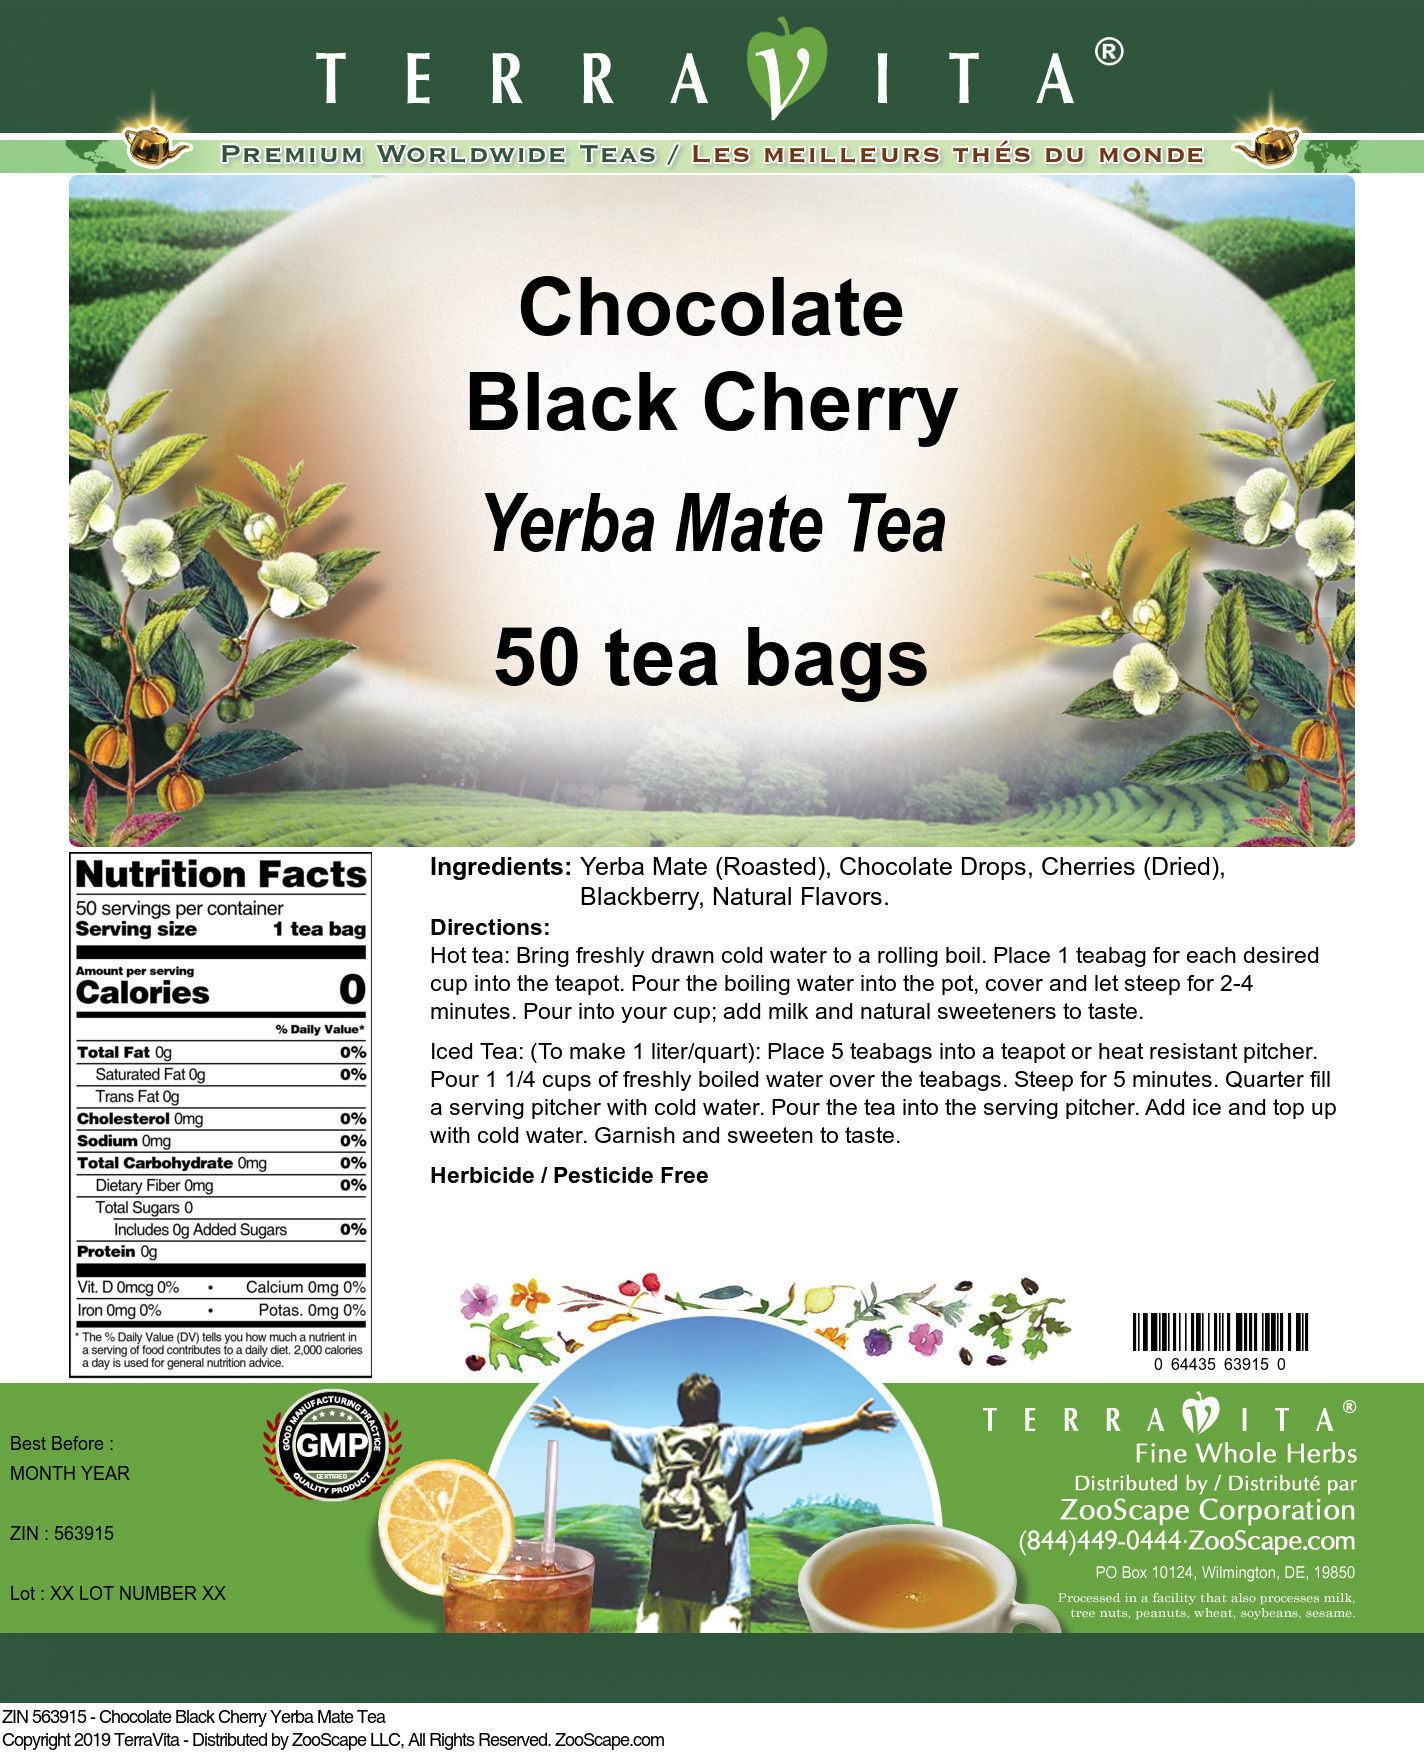 Chocolate Black Cherry Yerba Mate Tea - Label